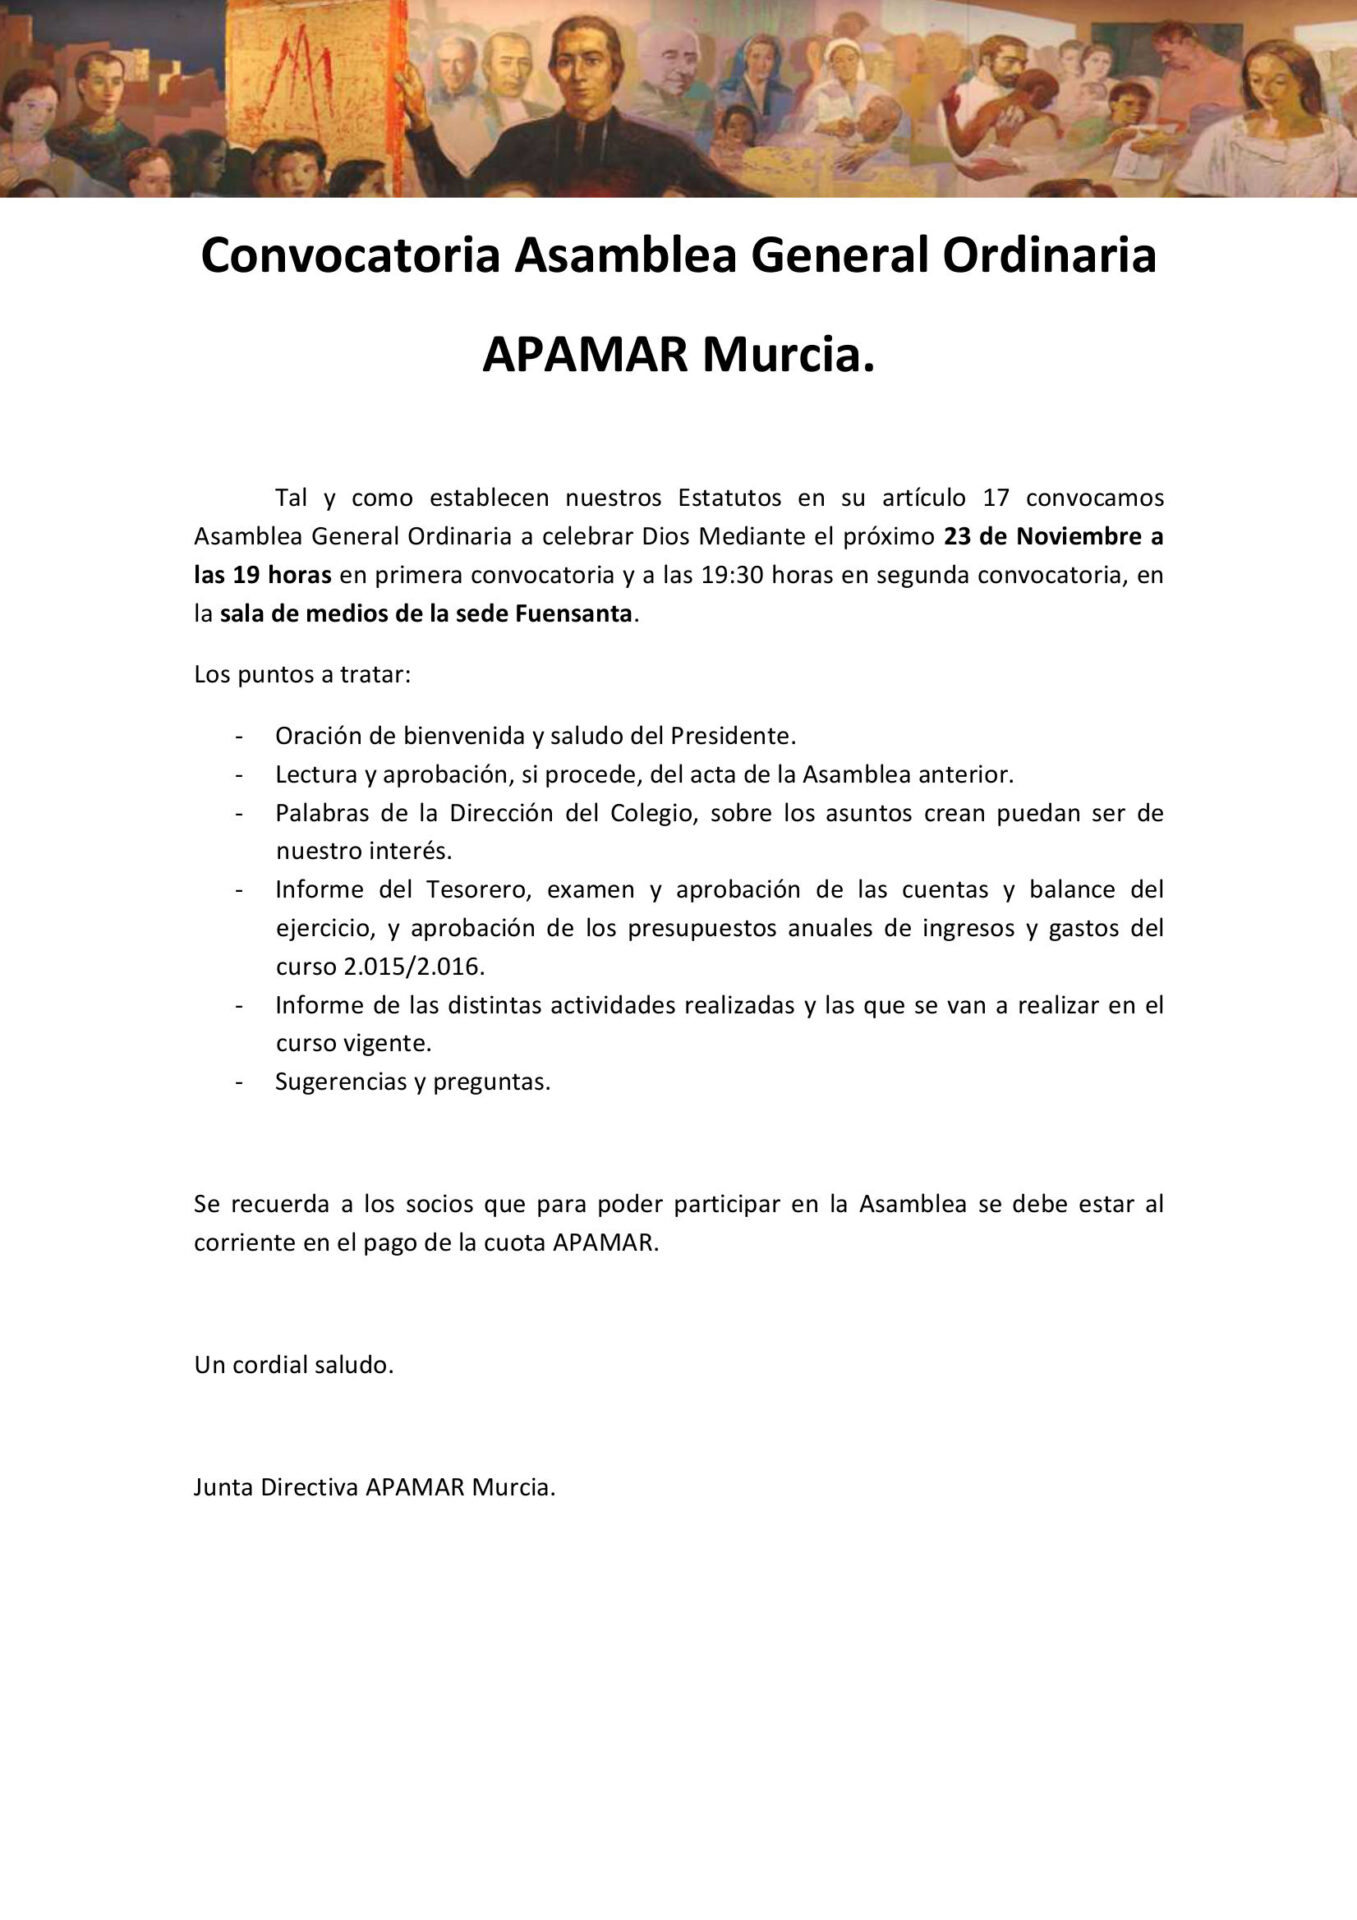 Asamblea General Ordinaria de APAMAR Murcia